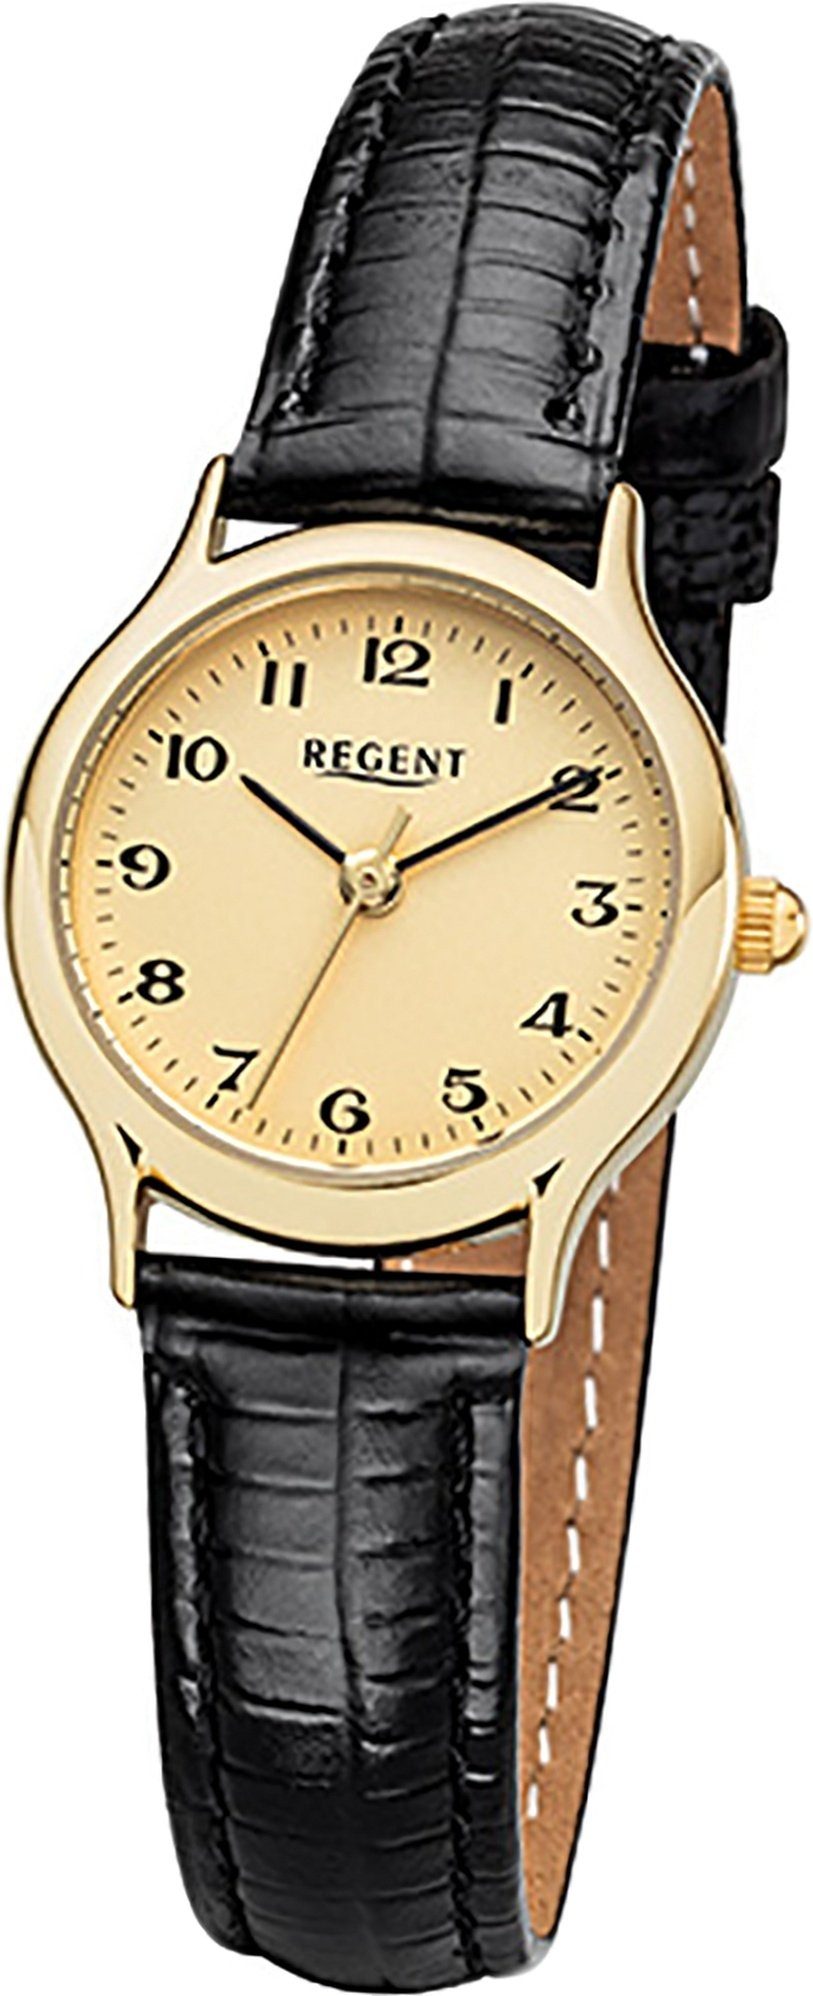 Regent Quarzuhr Regent Leder Damen Uhr F-970 Quarzuhr, Damenuhr mit Lederarmband, rundes Gehäuse, klein (ca. 24mm), Elegant-S